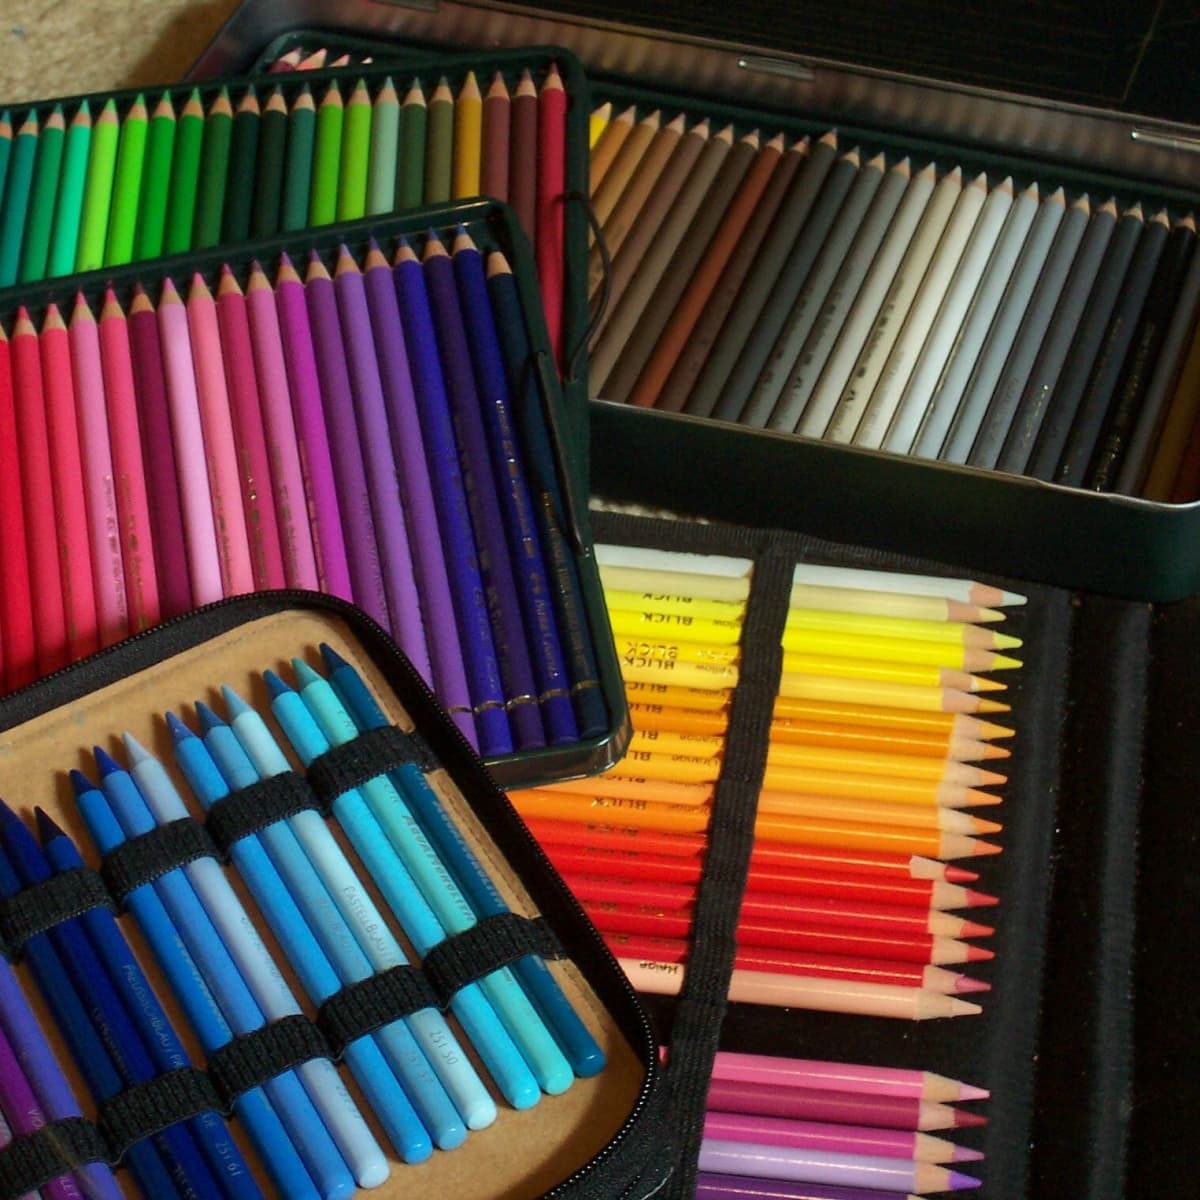 Tate art materials colouring pencils